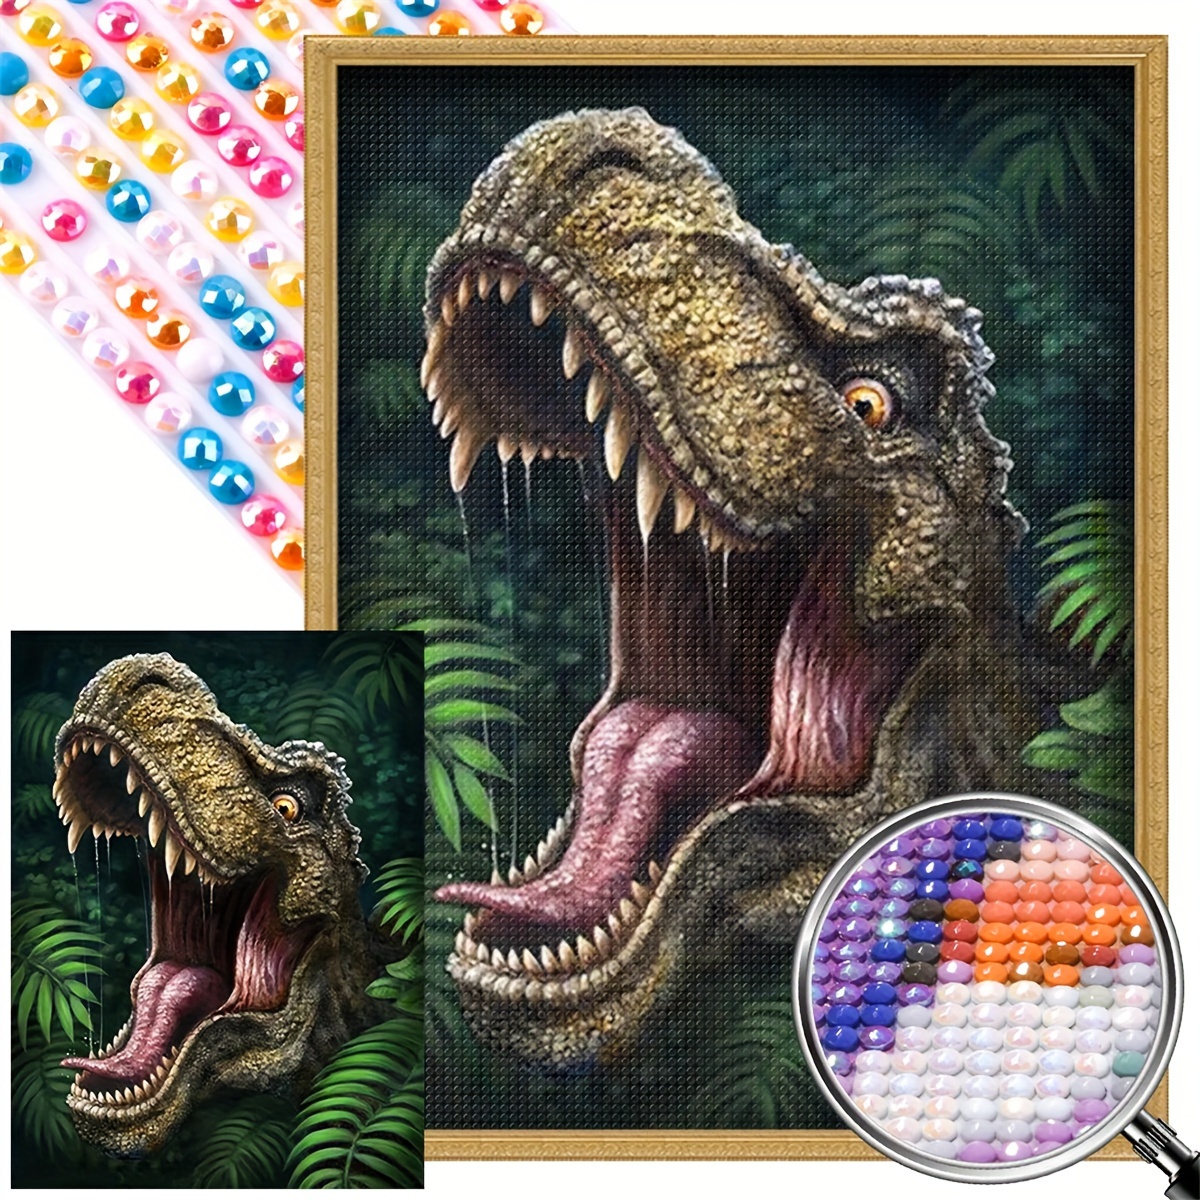 T-Rex-Dinosaur Diamond Painting - 60x80cm (24x32in) / Square